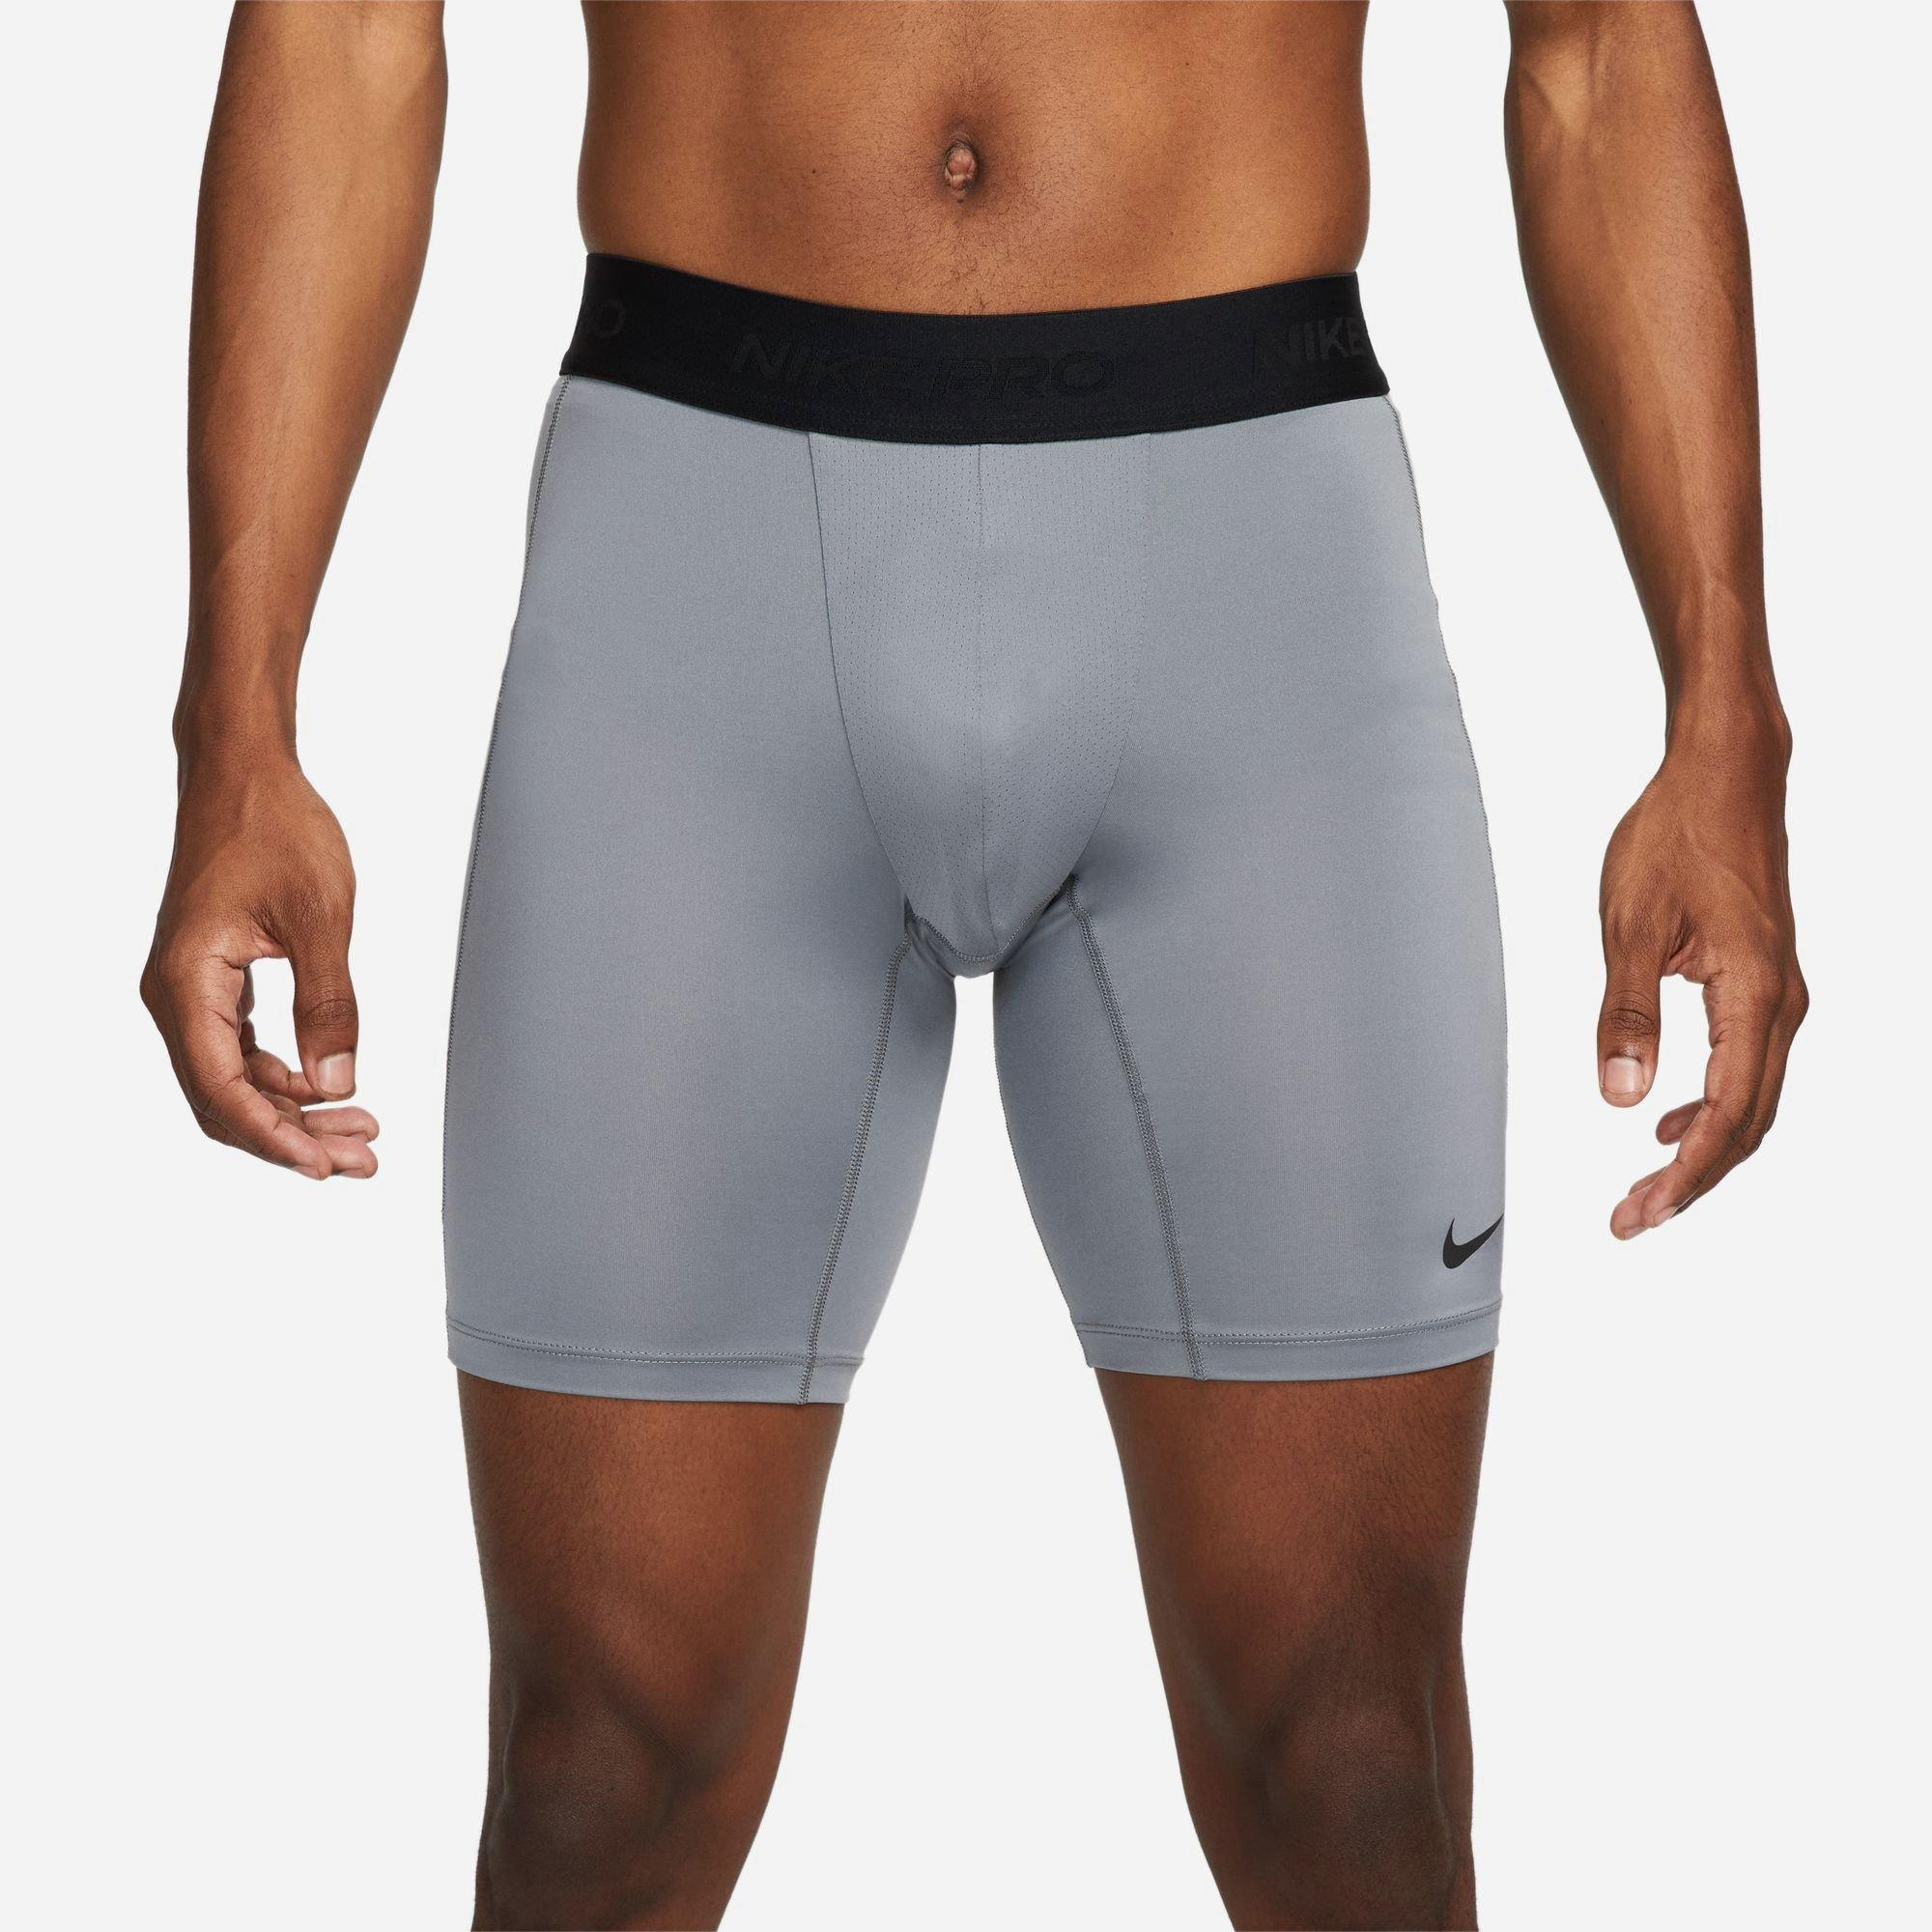  Nike Men's Pro Shorts, Black/Dark Grey/White, Small :  Clothing, Shoes & Jewelry